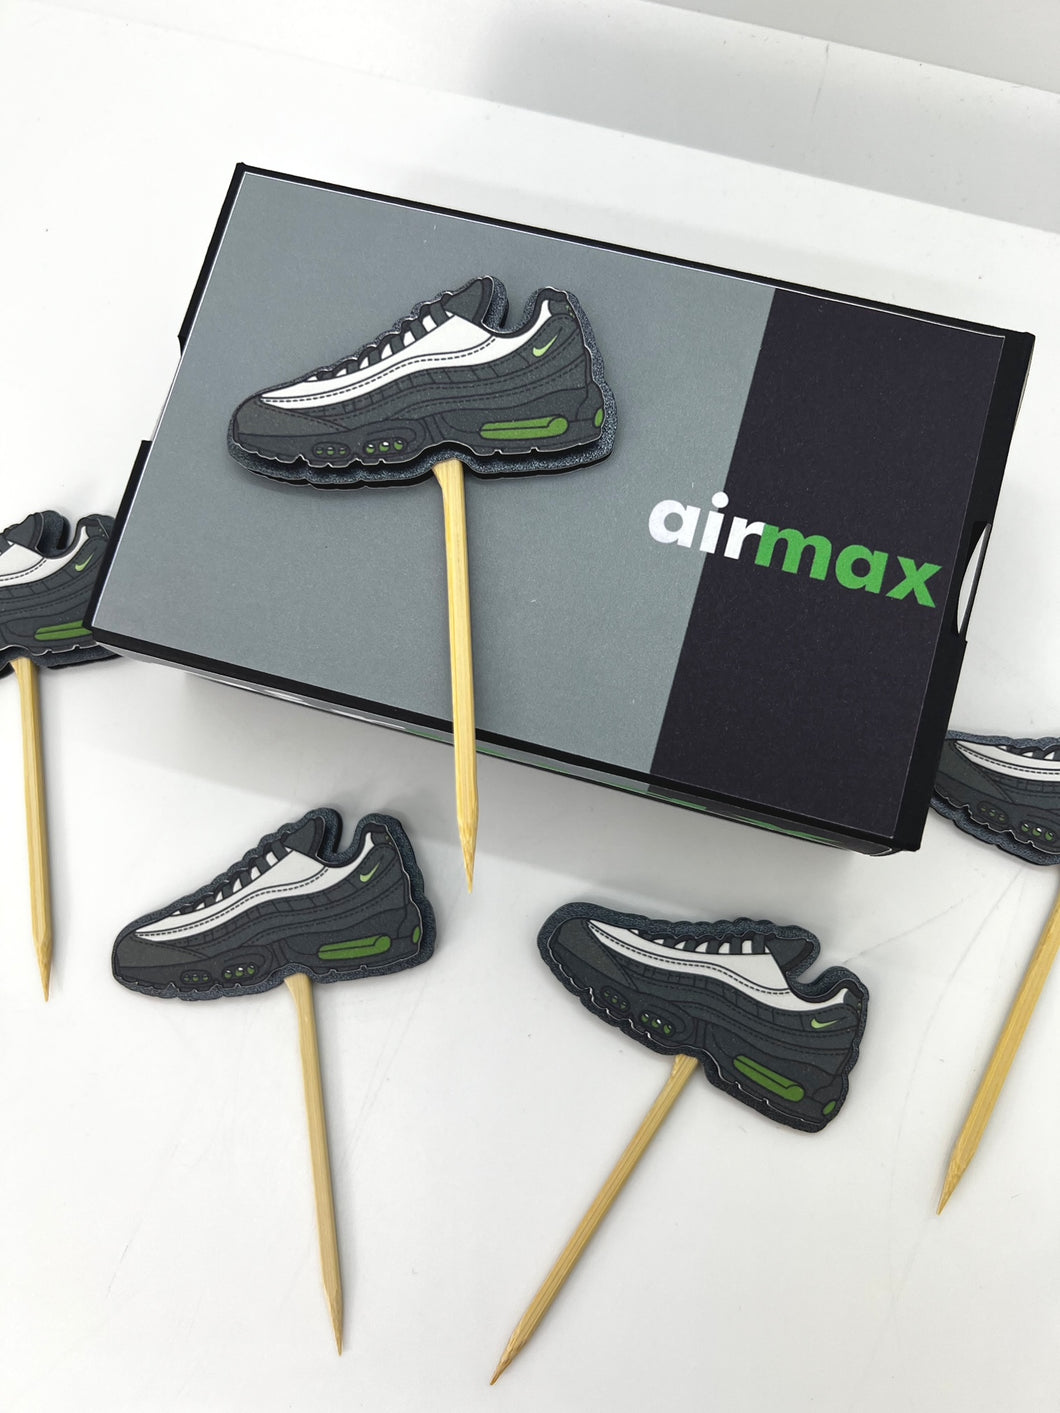 Airmaxx cake topper, Nike shoe cupcake topper, shoe cupcake topper, shoe party decorations, sneaker cupcake topper, airmax 95, sneaker